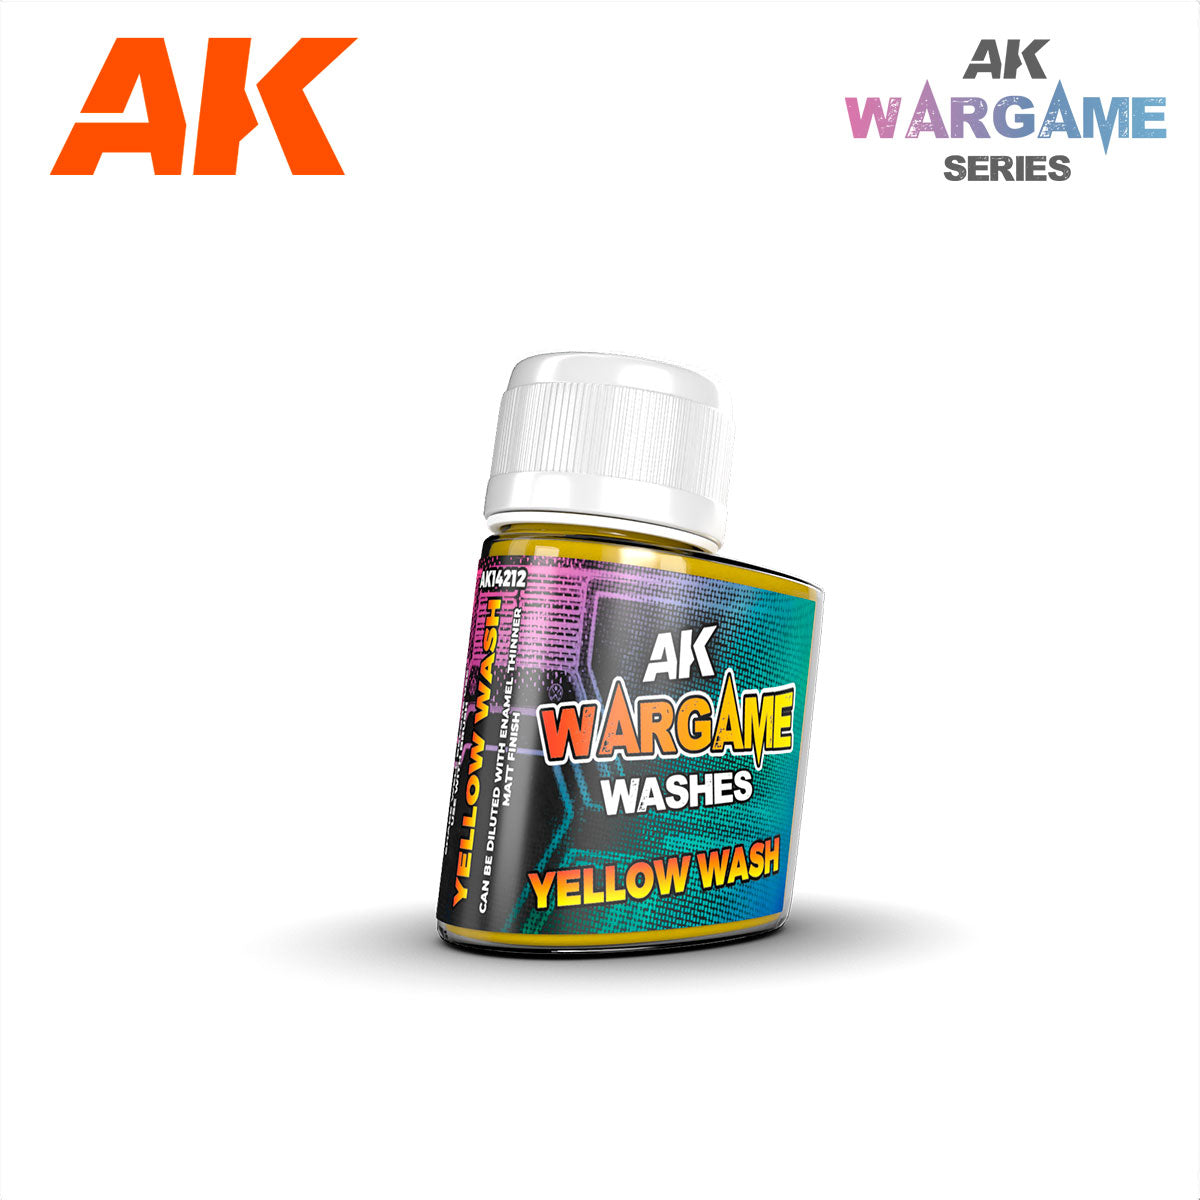 AK14212 - Yellow wash (35ml) - Wargame Wash